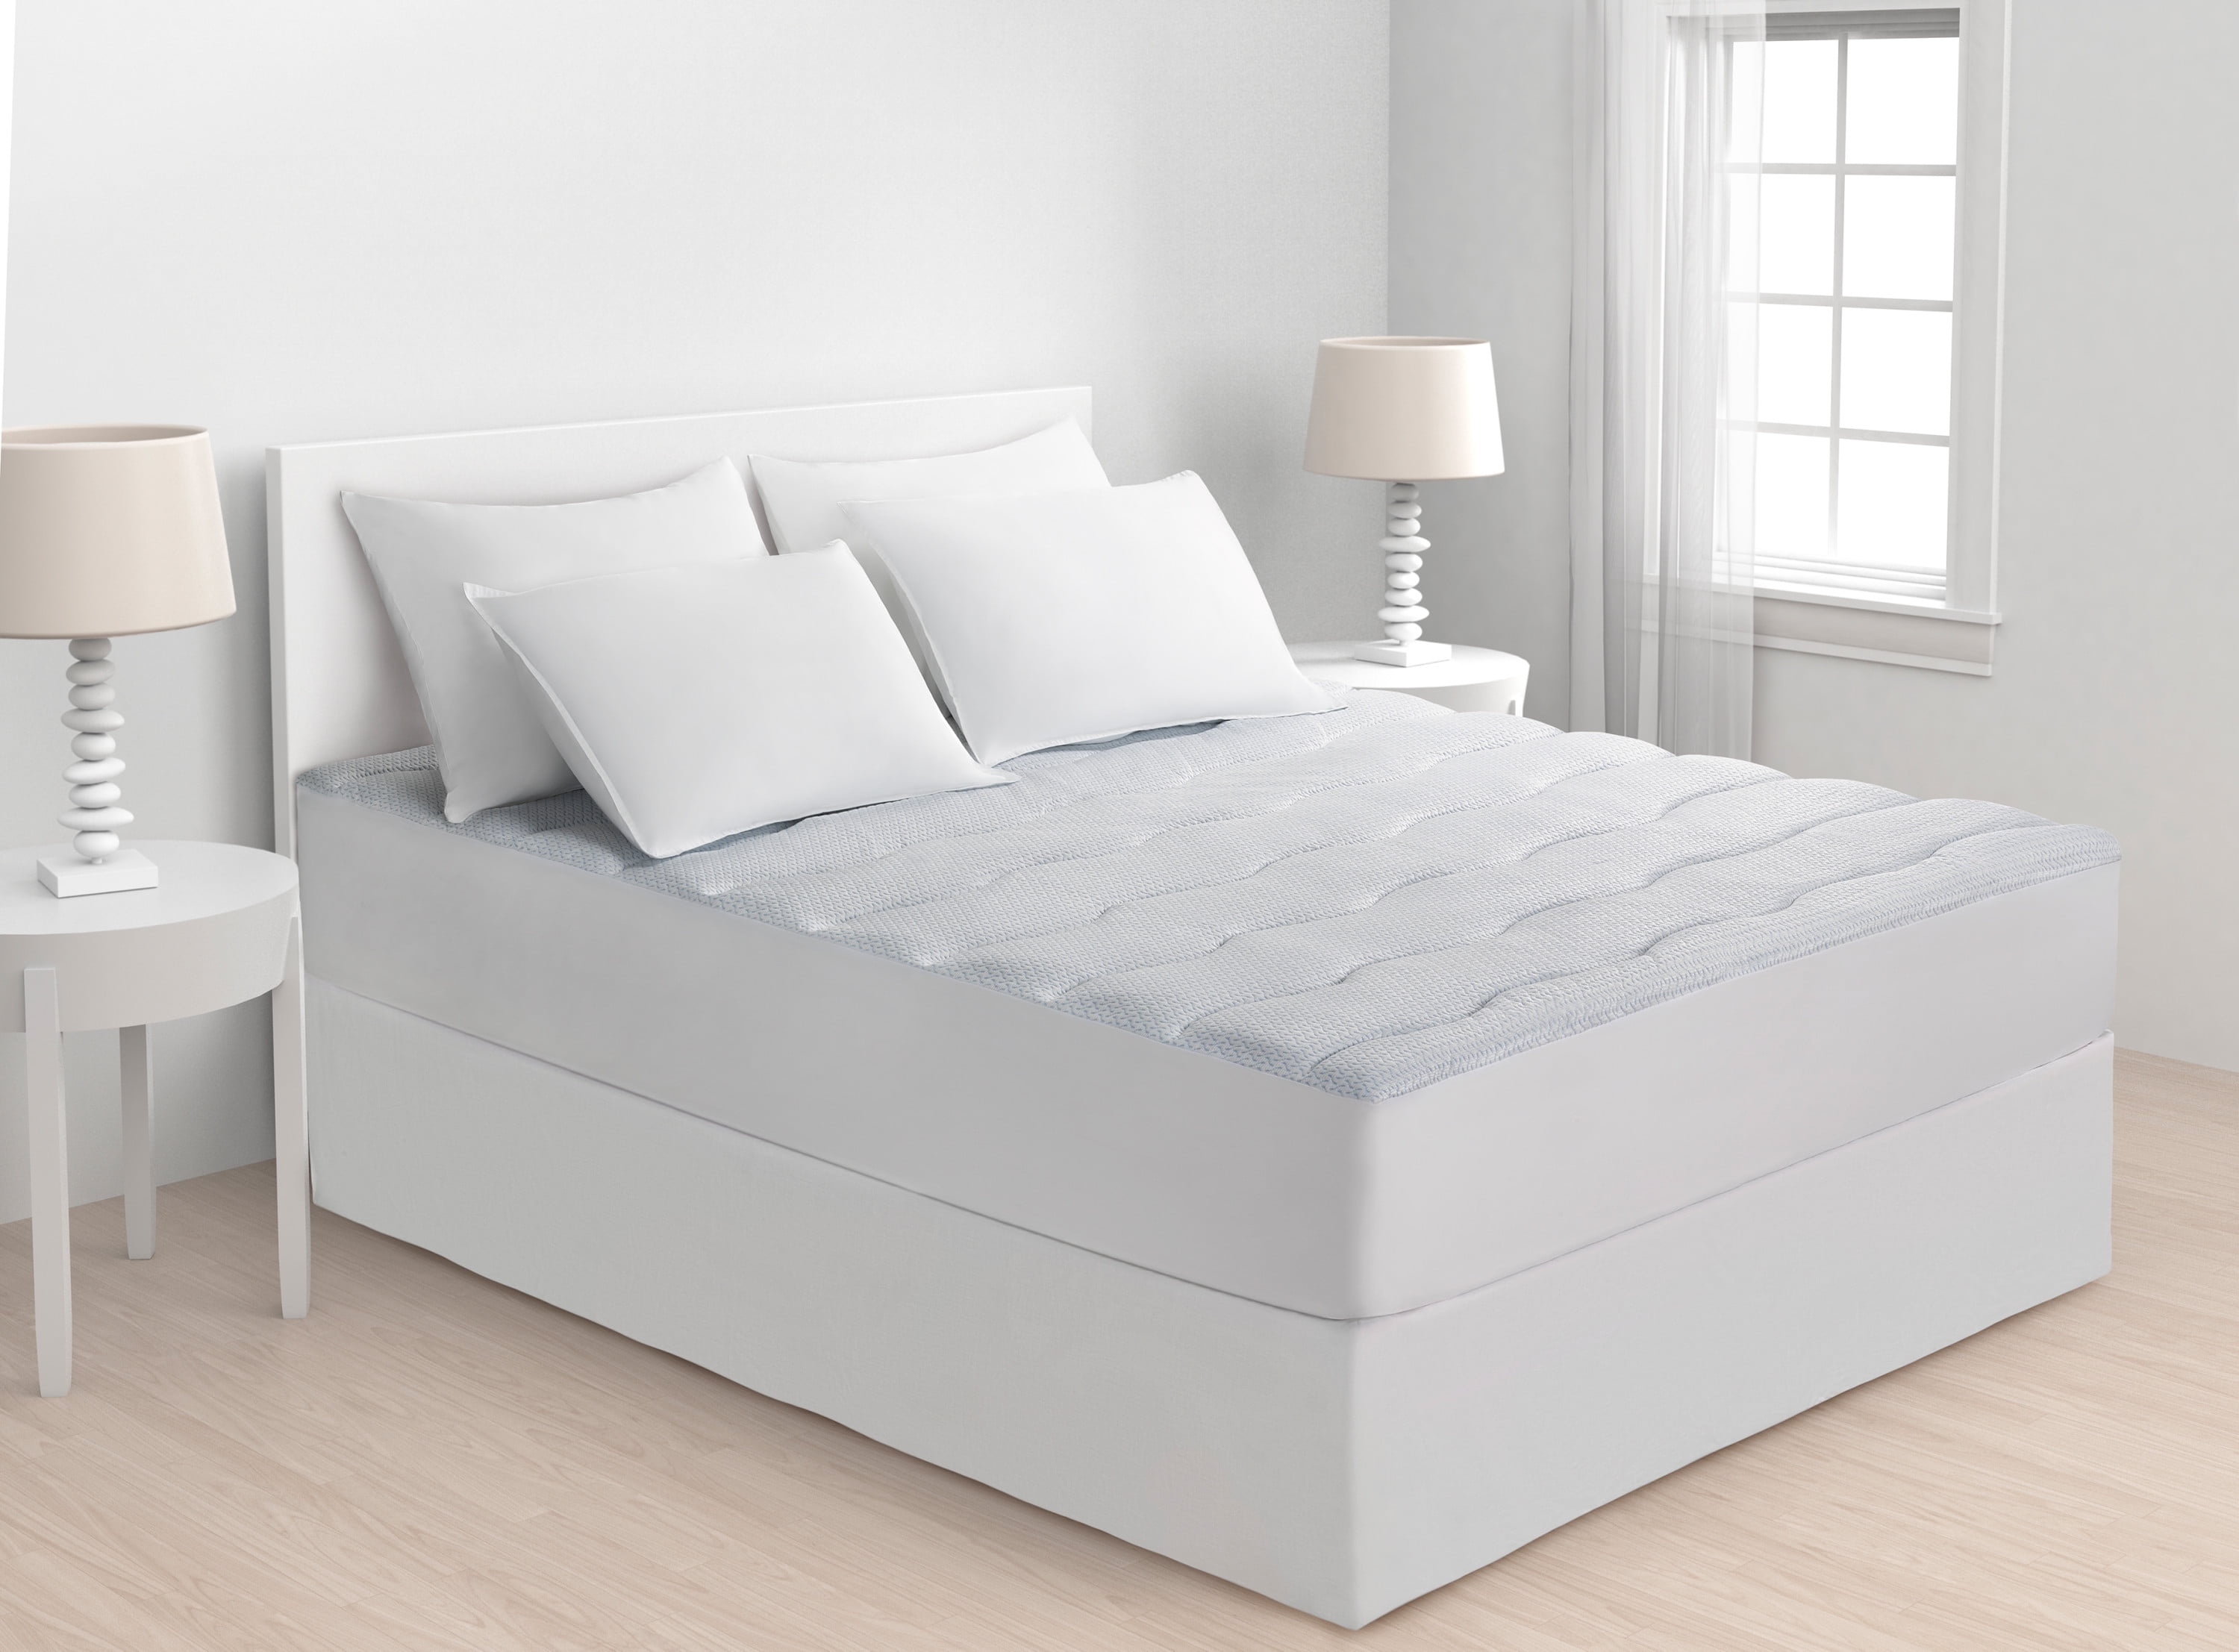 hospital bed mattress cover waterproof